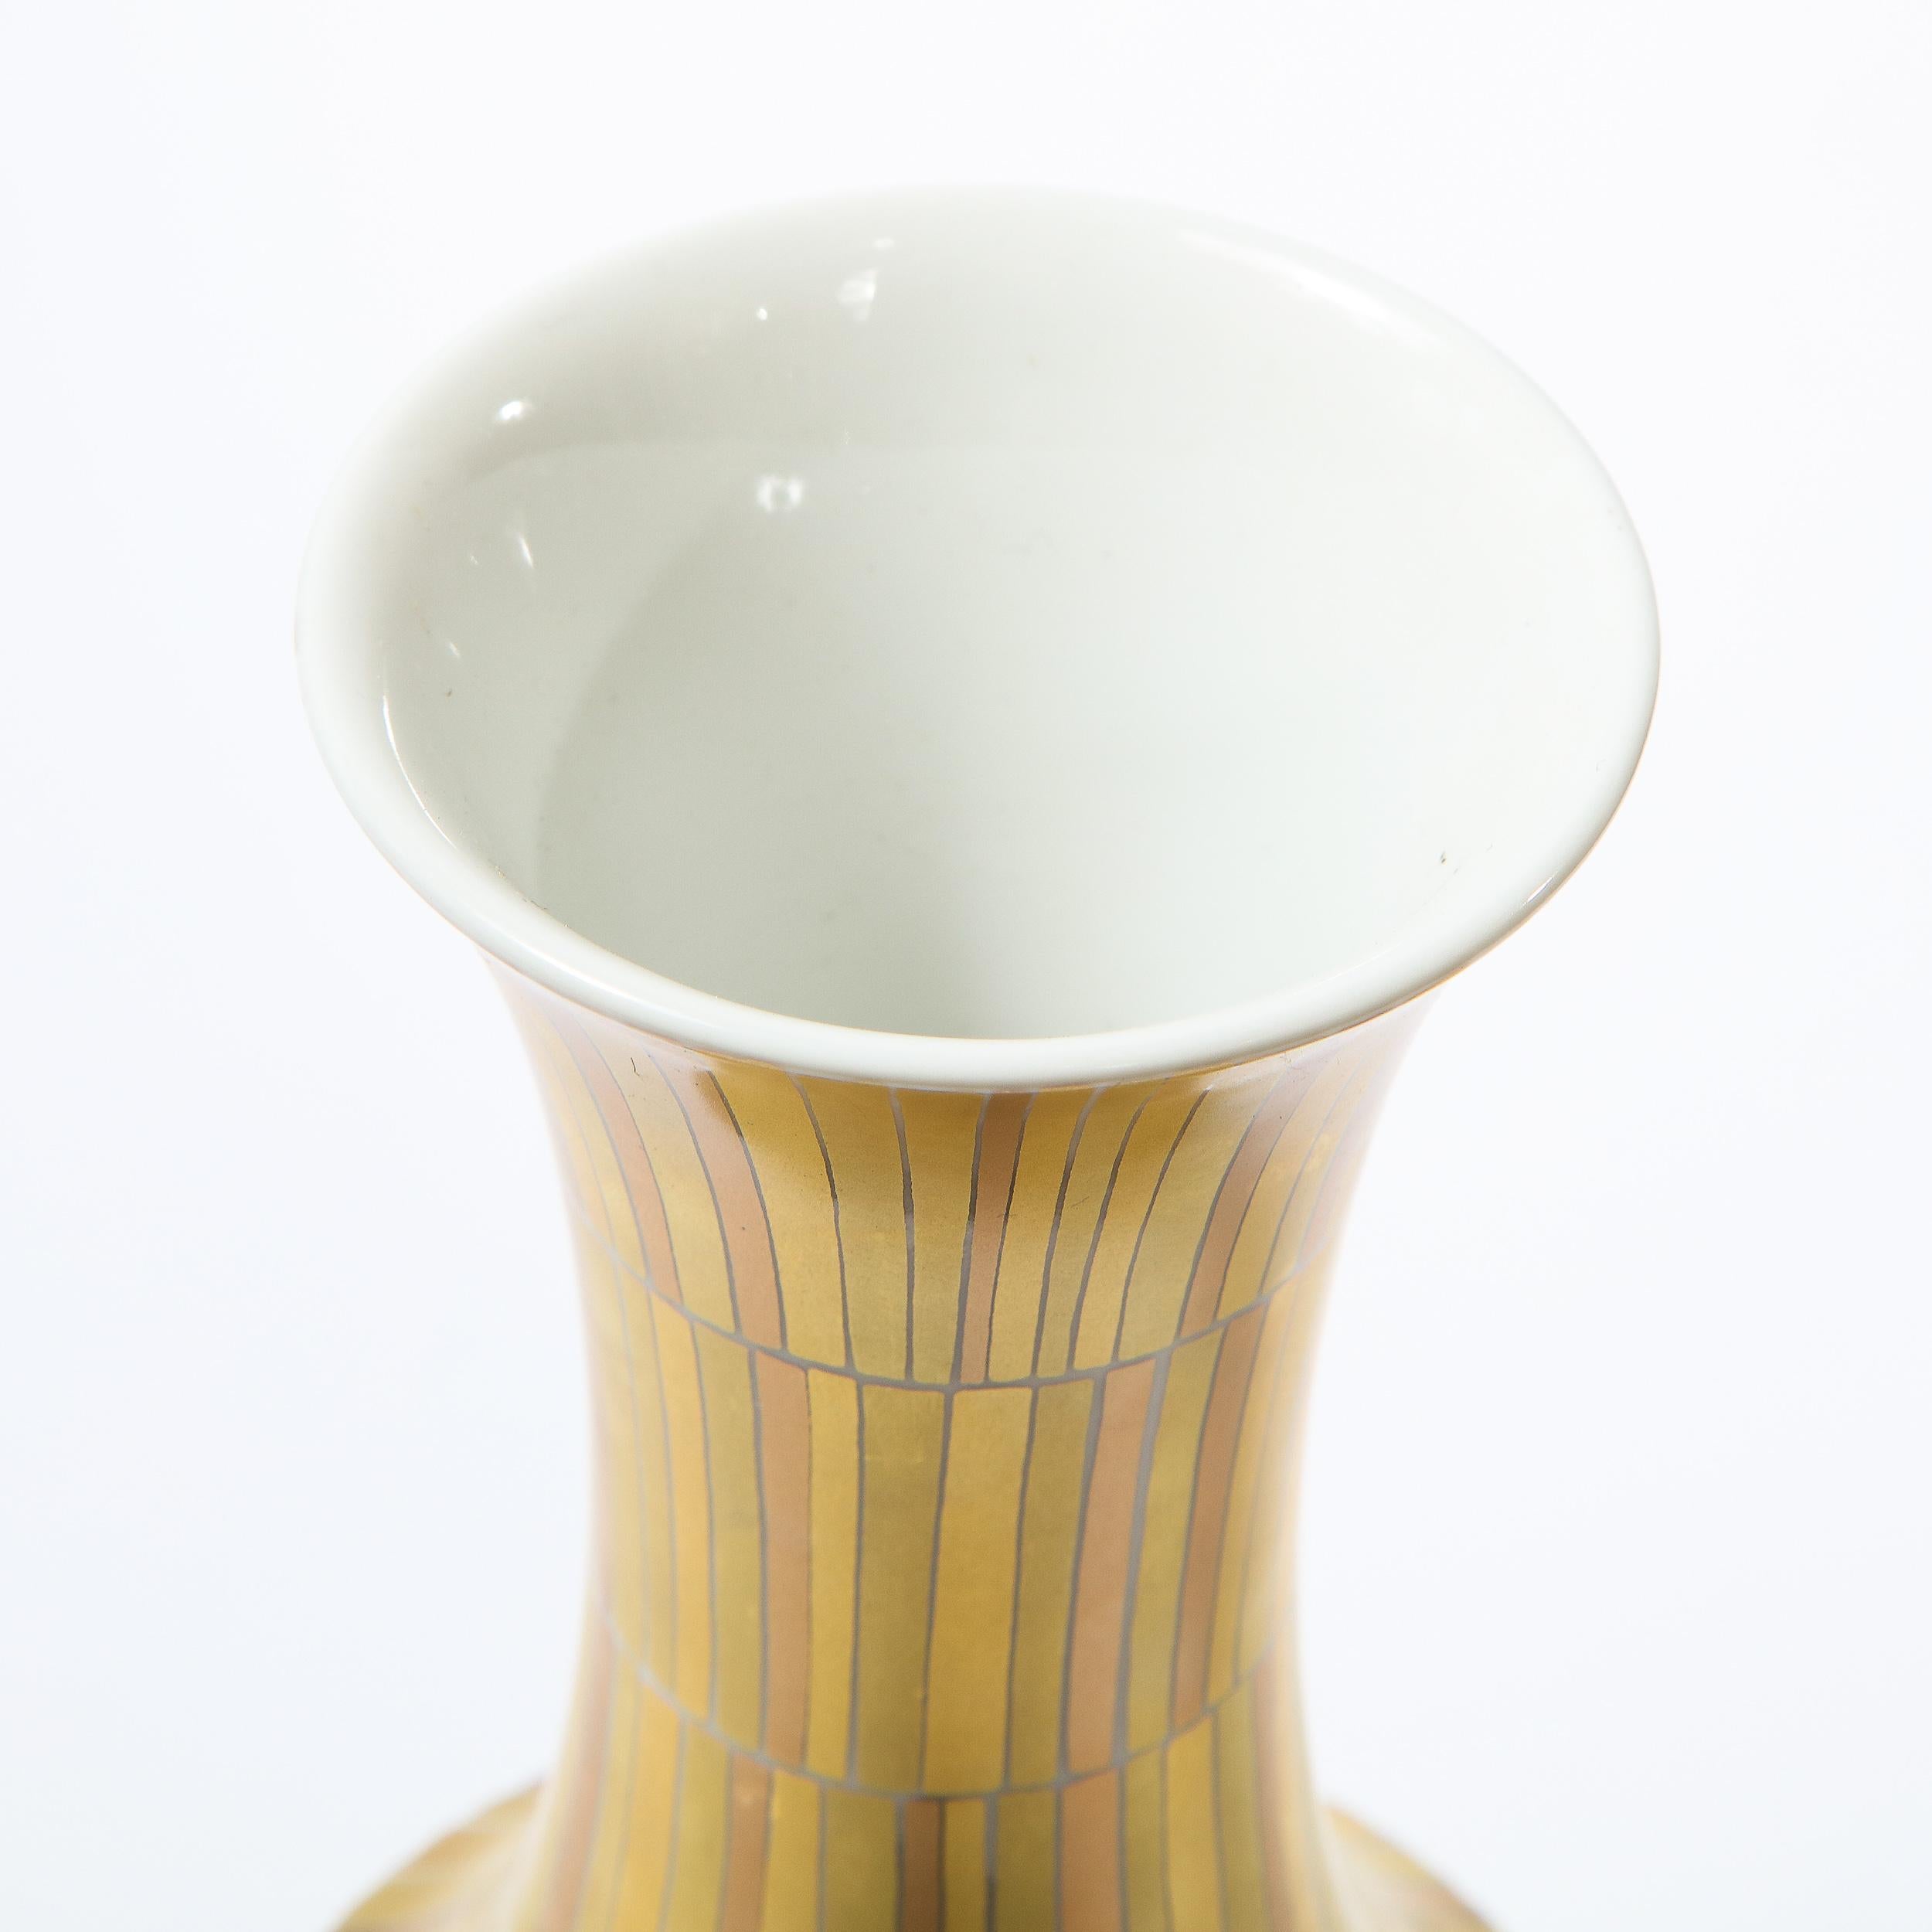 Signed Modernist Hourglass Form Porcelain Vase by Tapio Wirkkala for Rosenthal 1